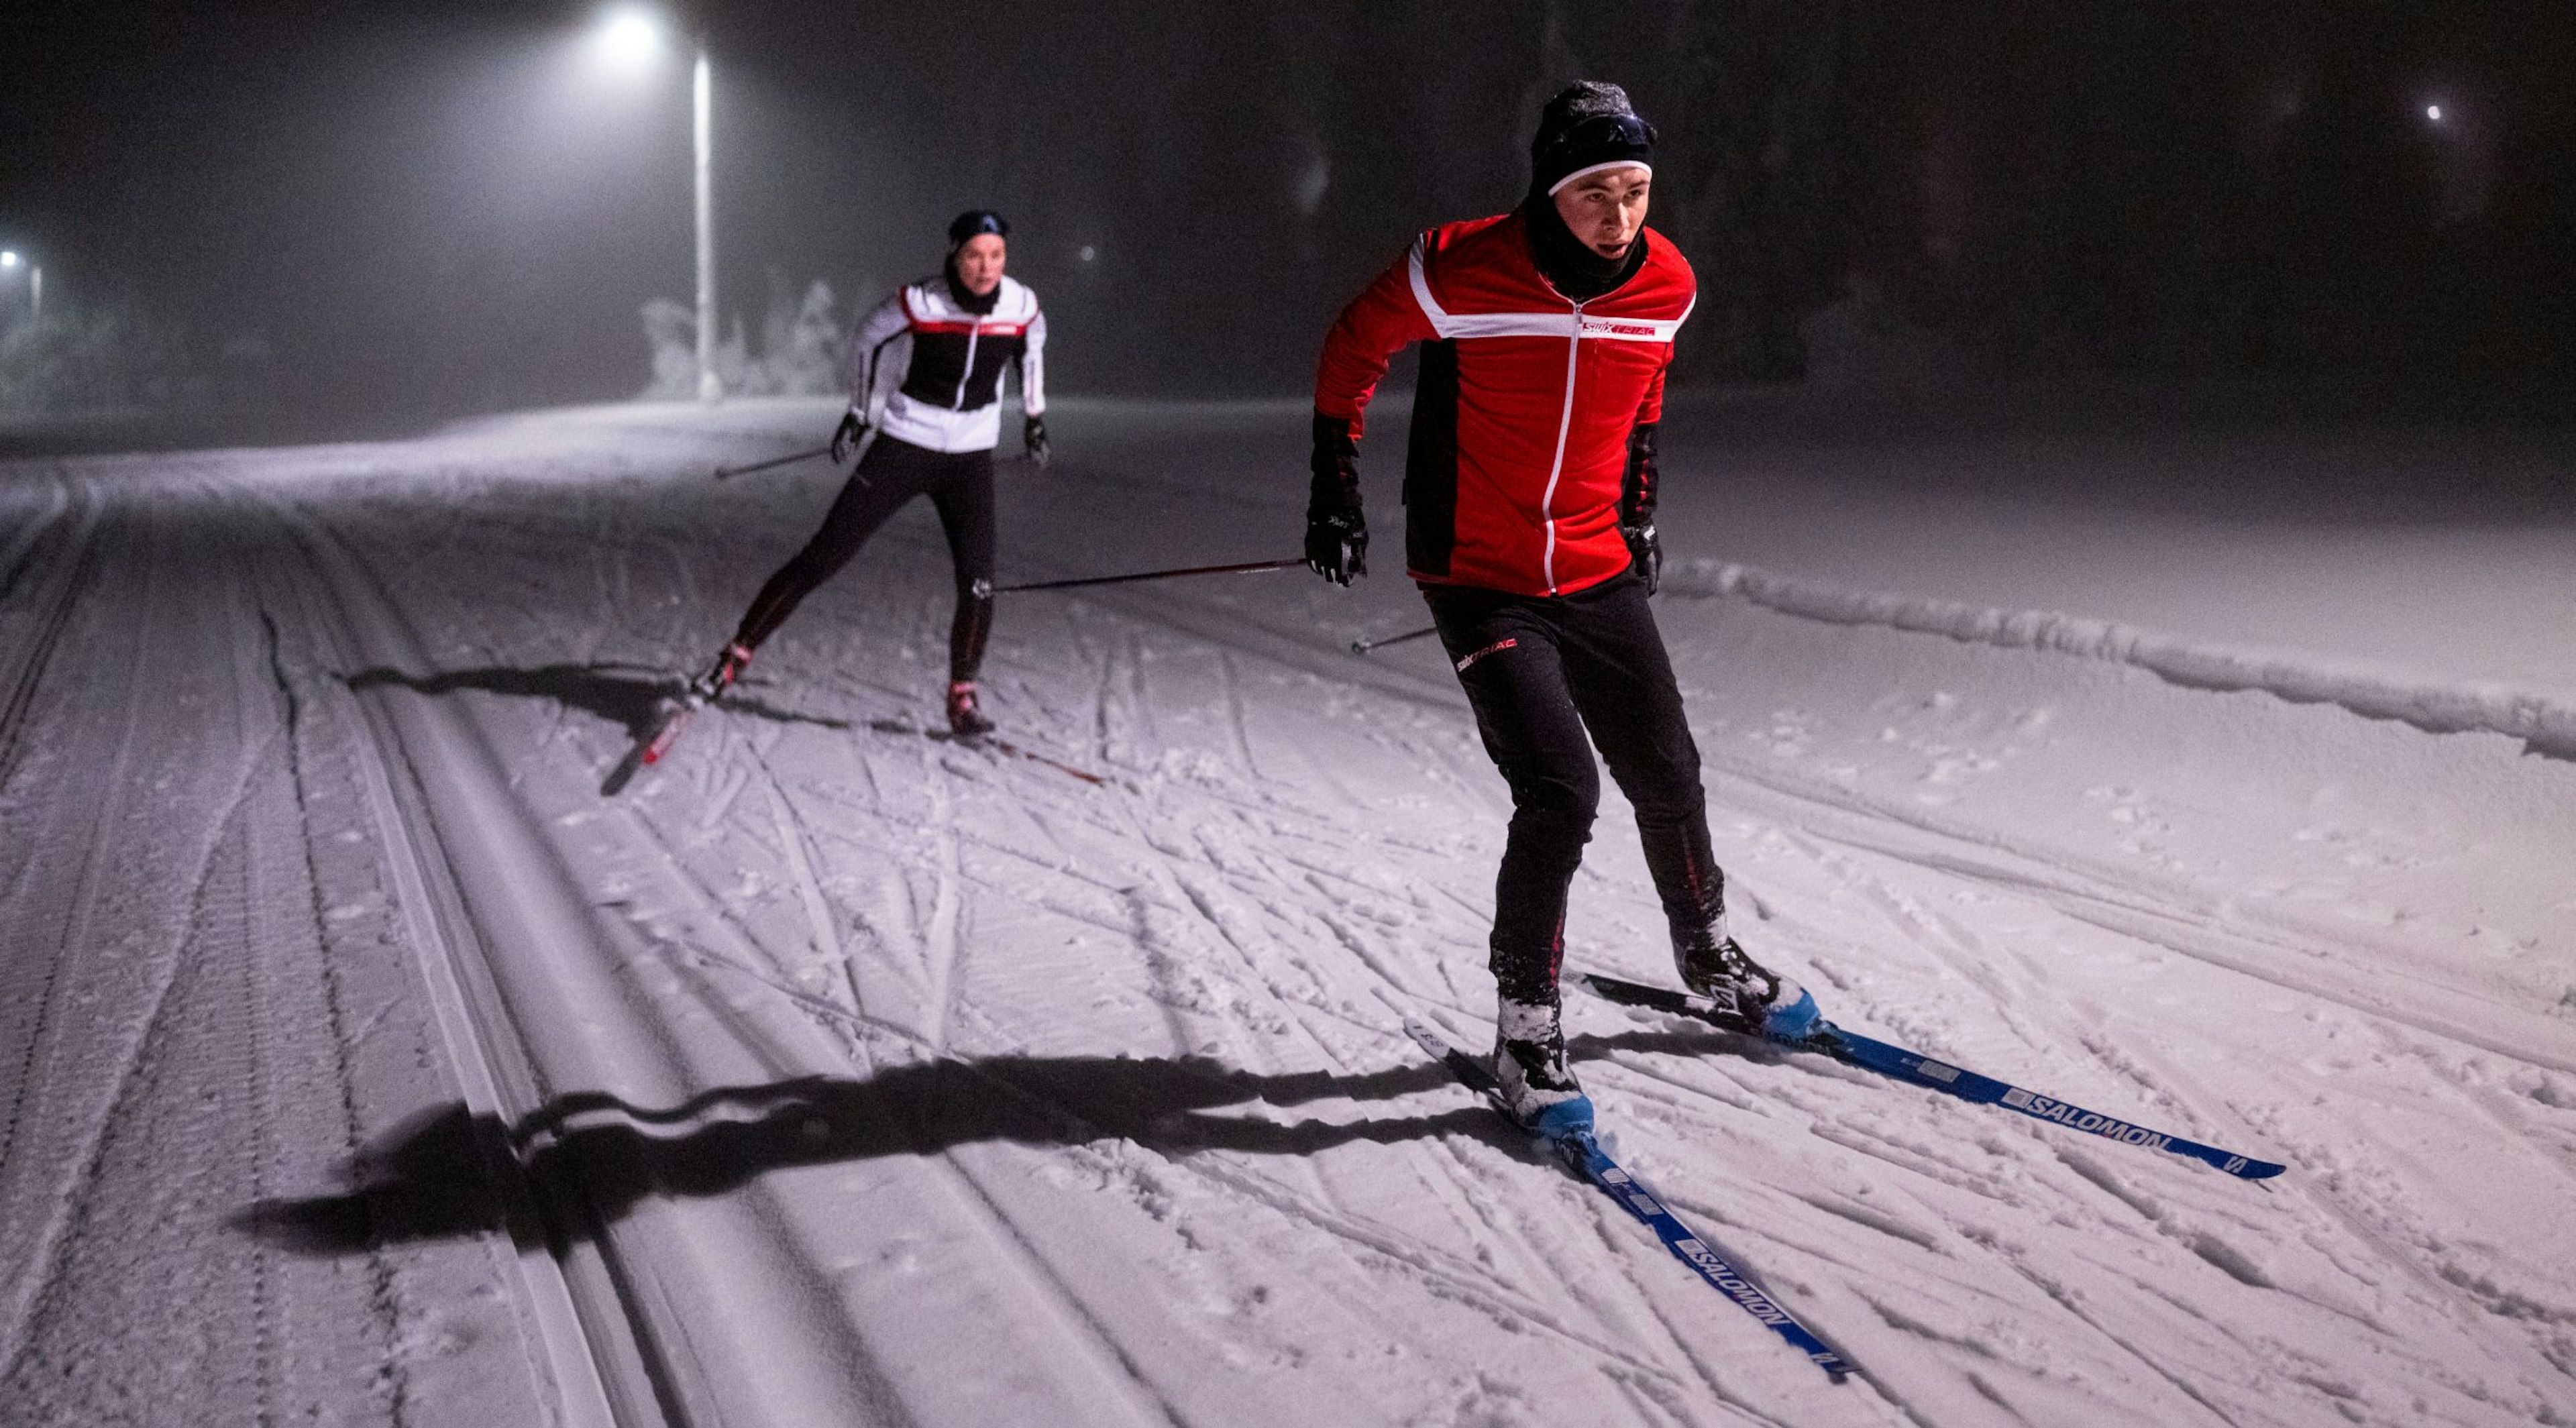 Mann og dame går på ski